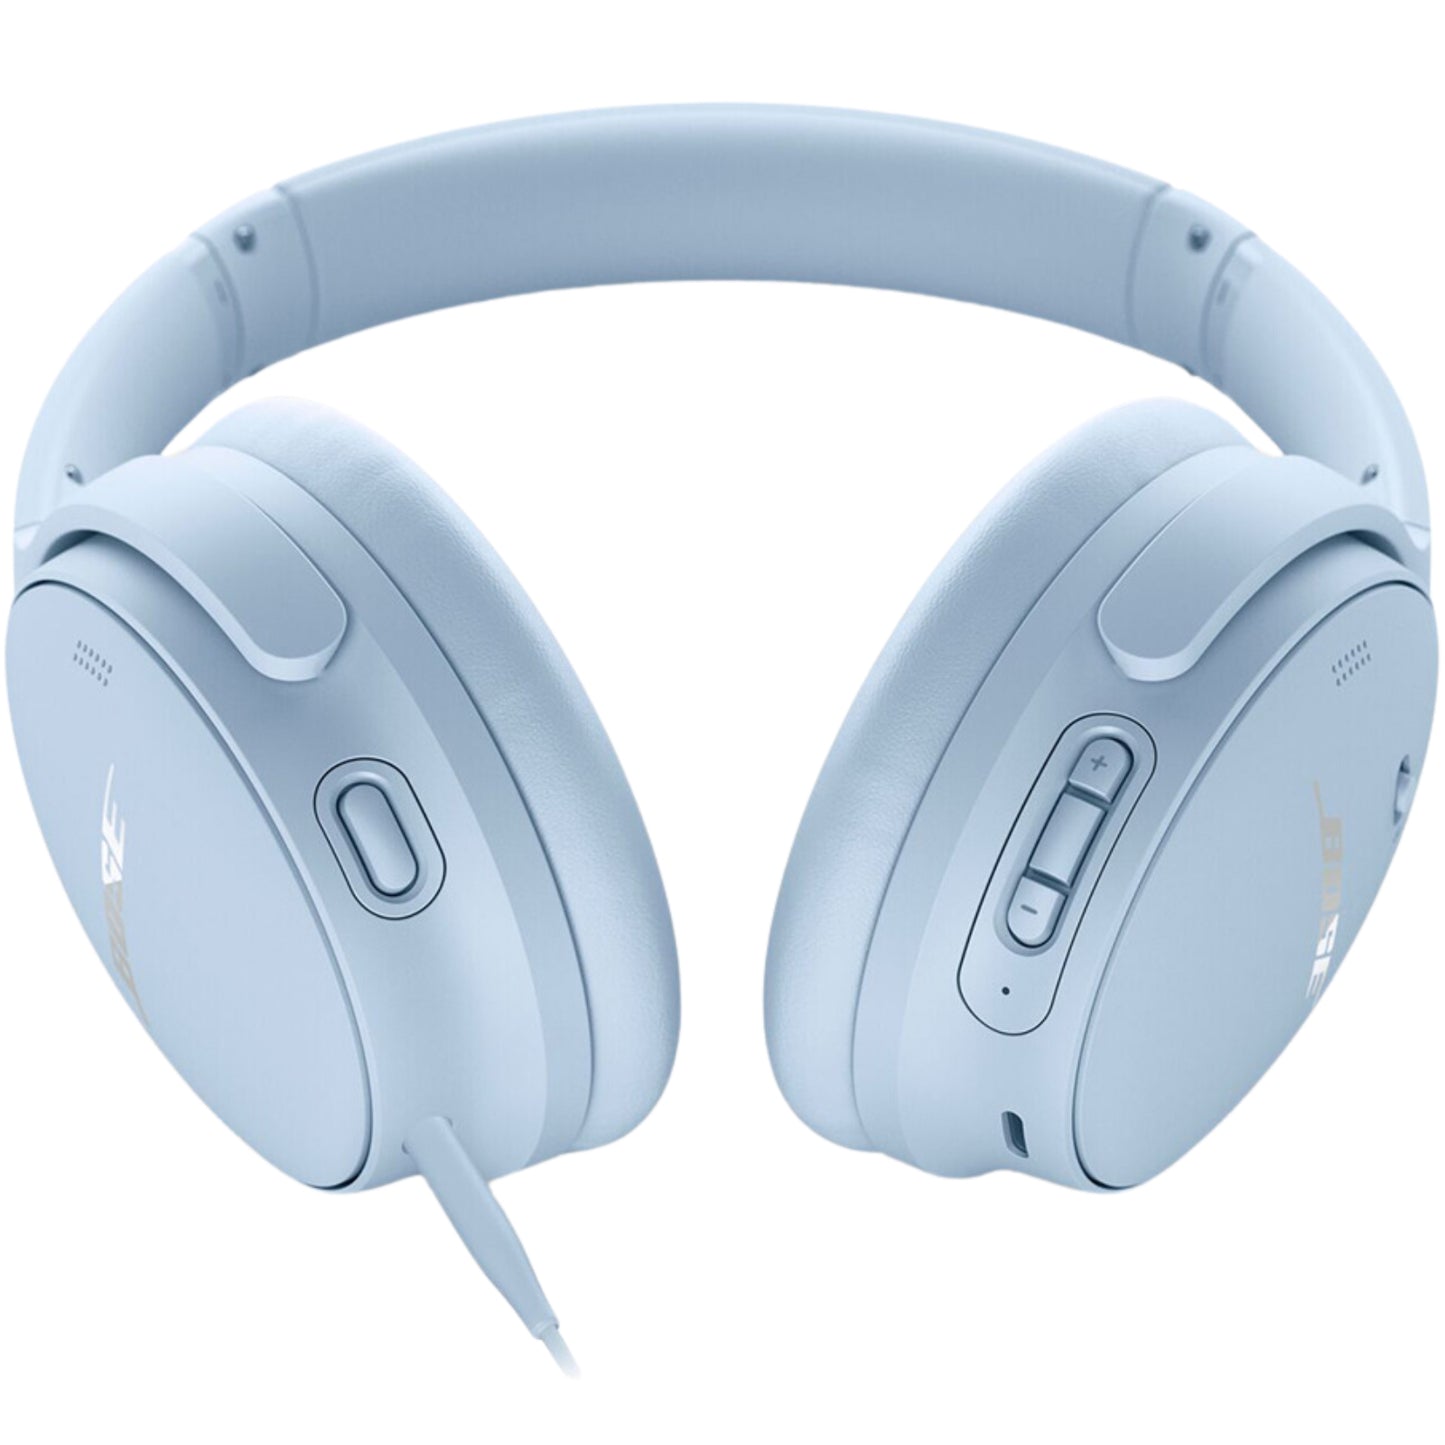 Bose QuietComfort Wireless Headphones M.Blue